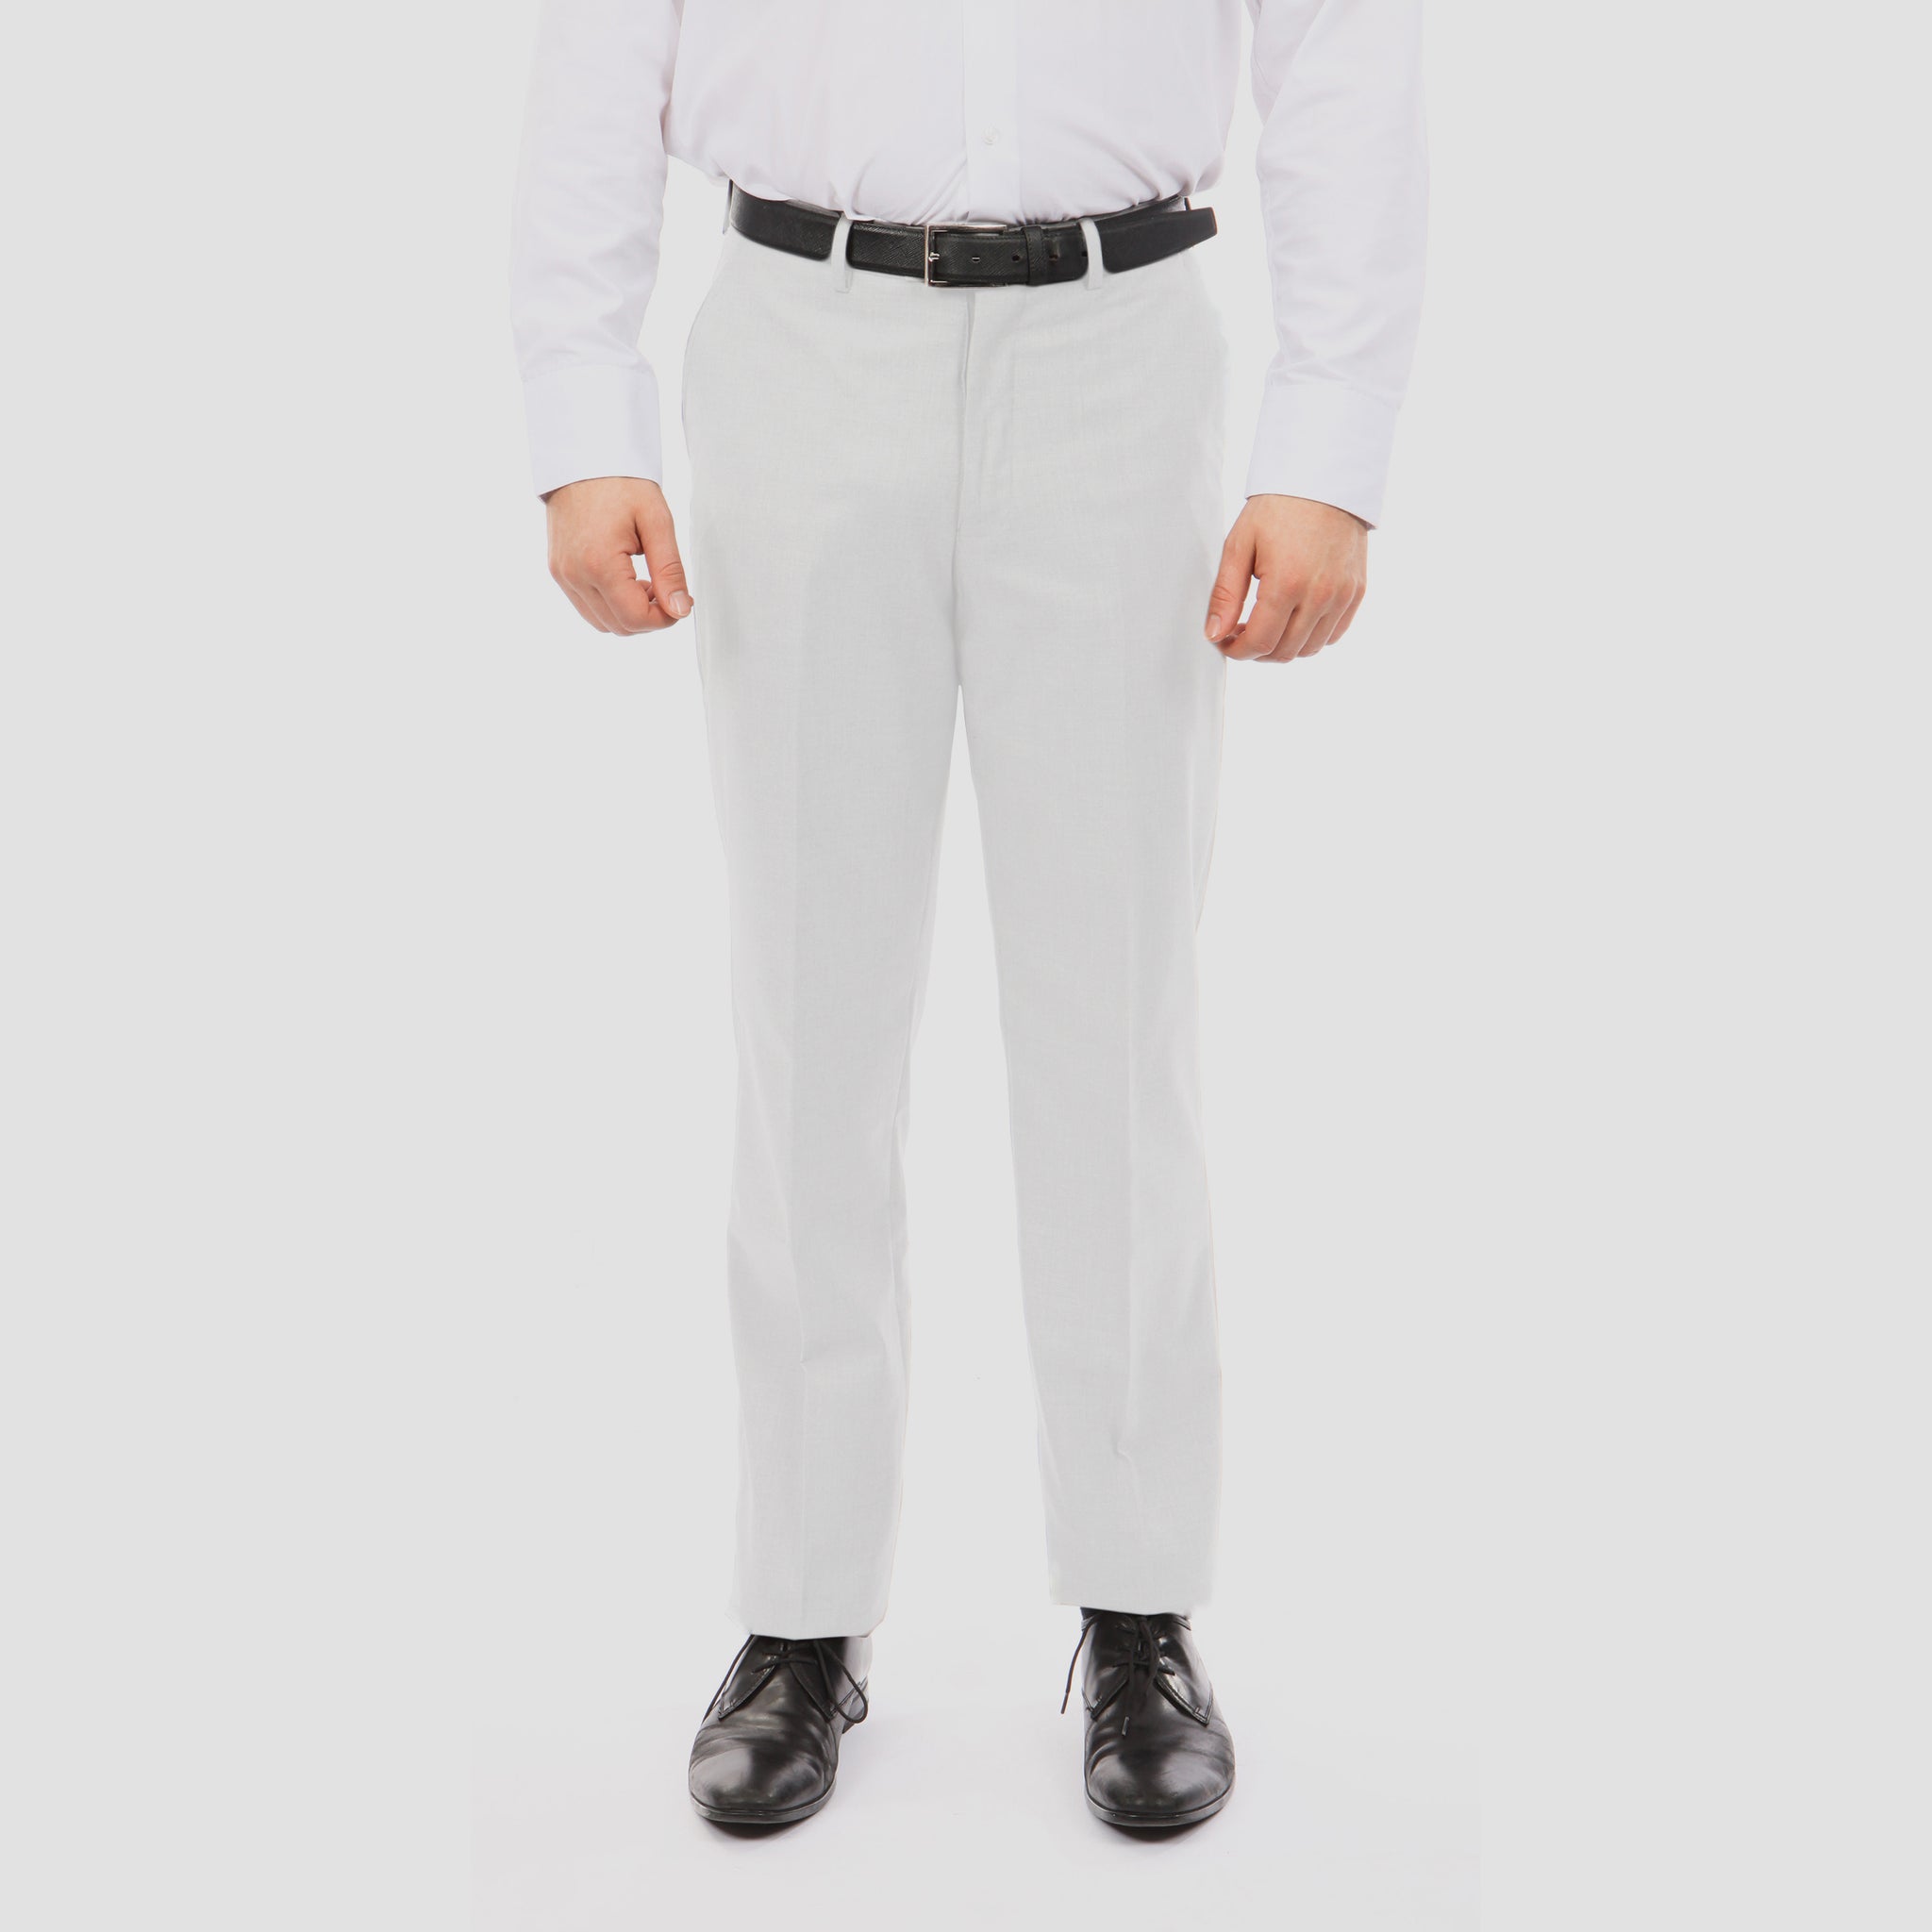 Tazio White Slim Fit Stretch Dress Pants For Men